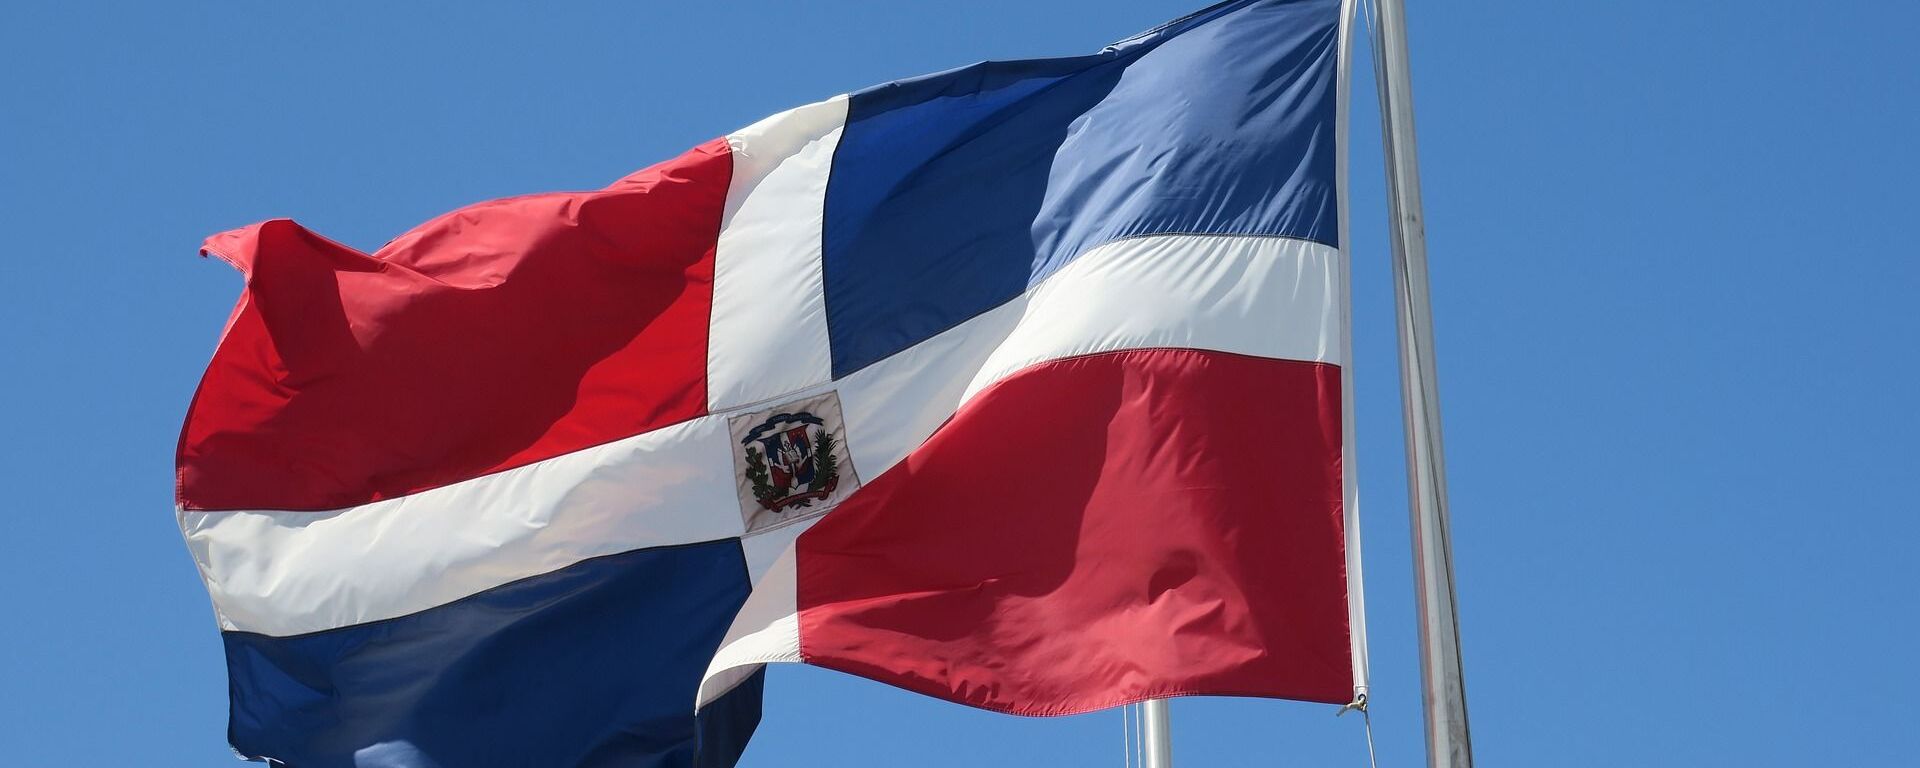 La bandera de la República Dominicana - Sputnik Mundo, 1920, 30.09.2021